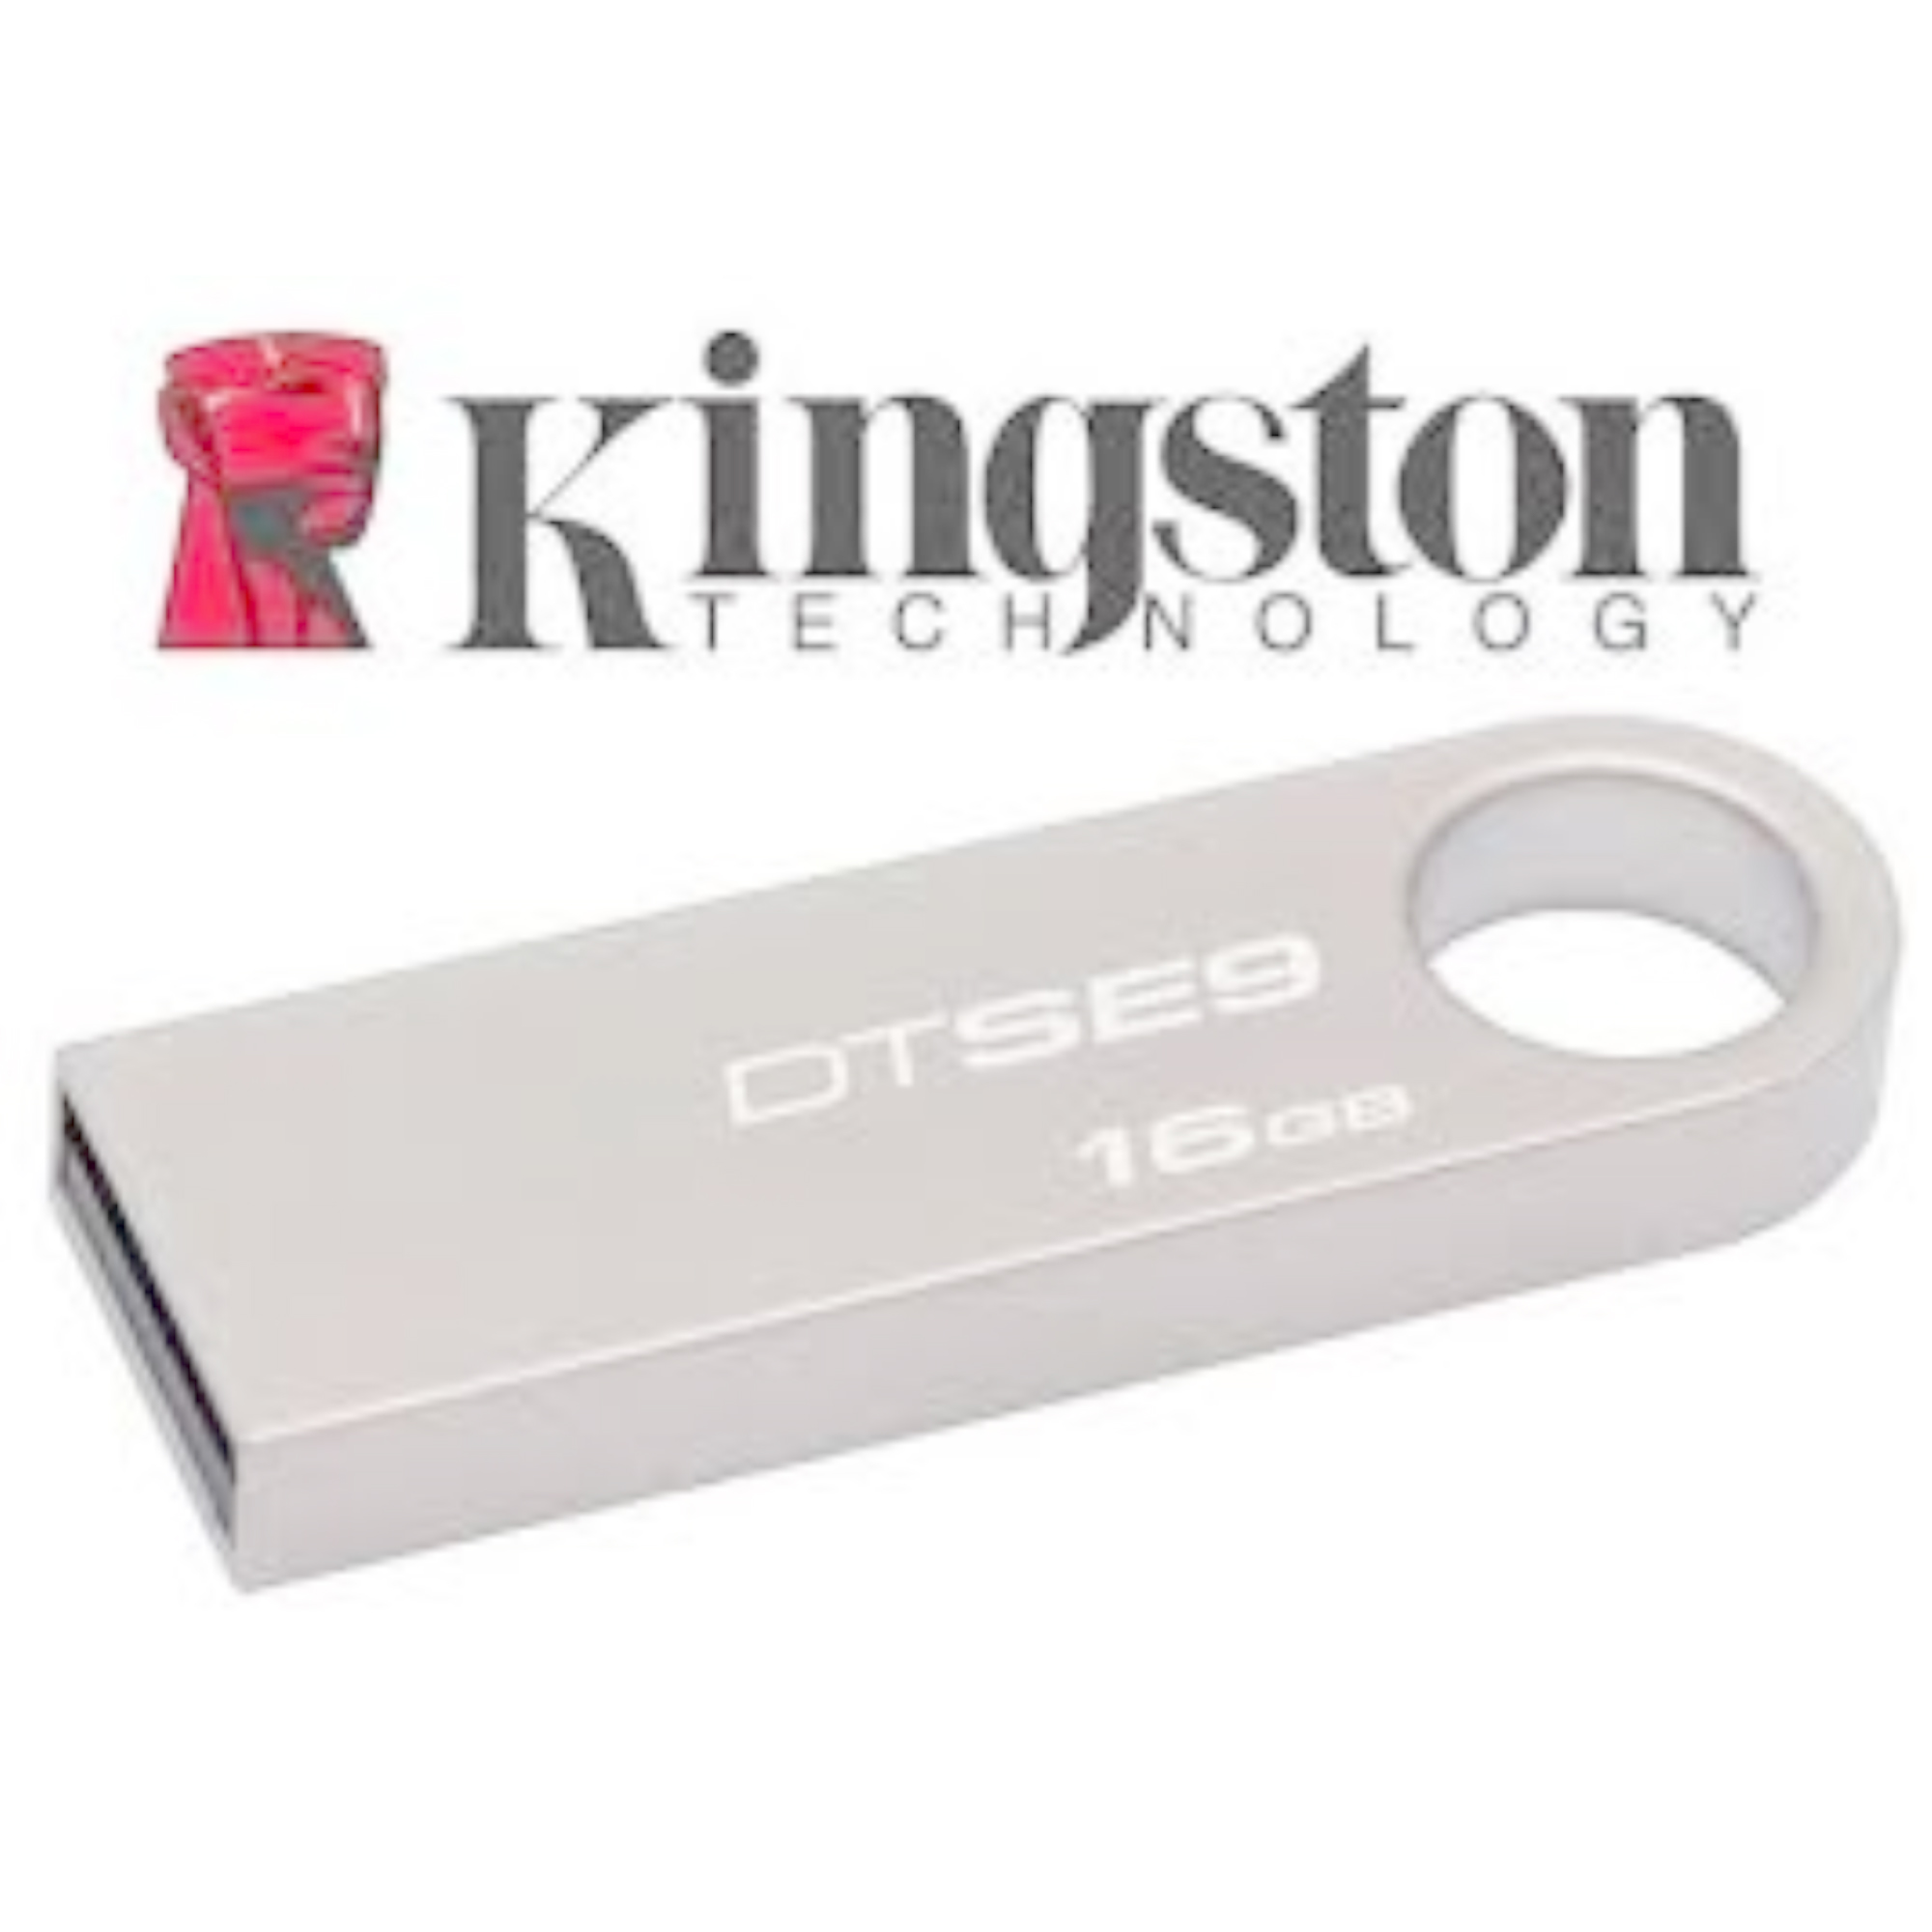 KINGSTON DataTraveler USB flash drive 2.0 Silver - 5PACK! - GotDeal